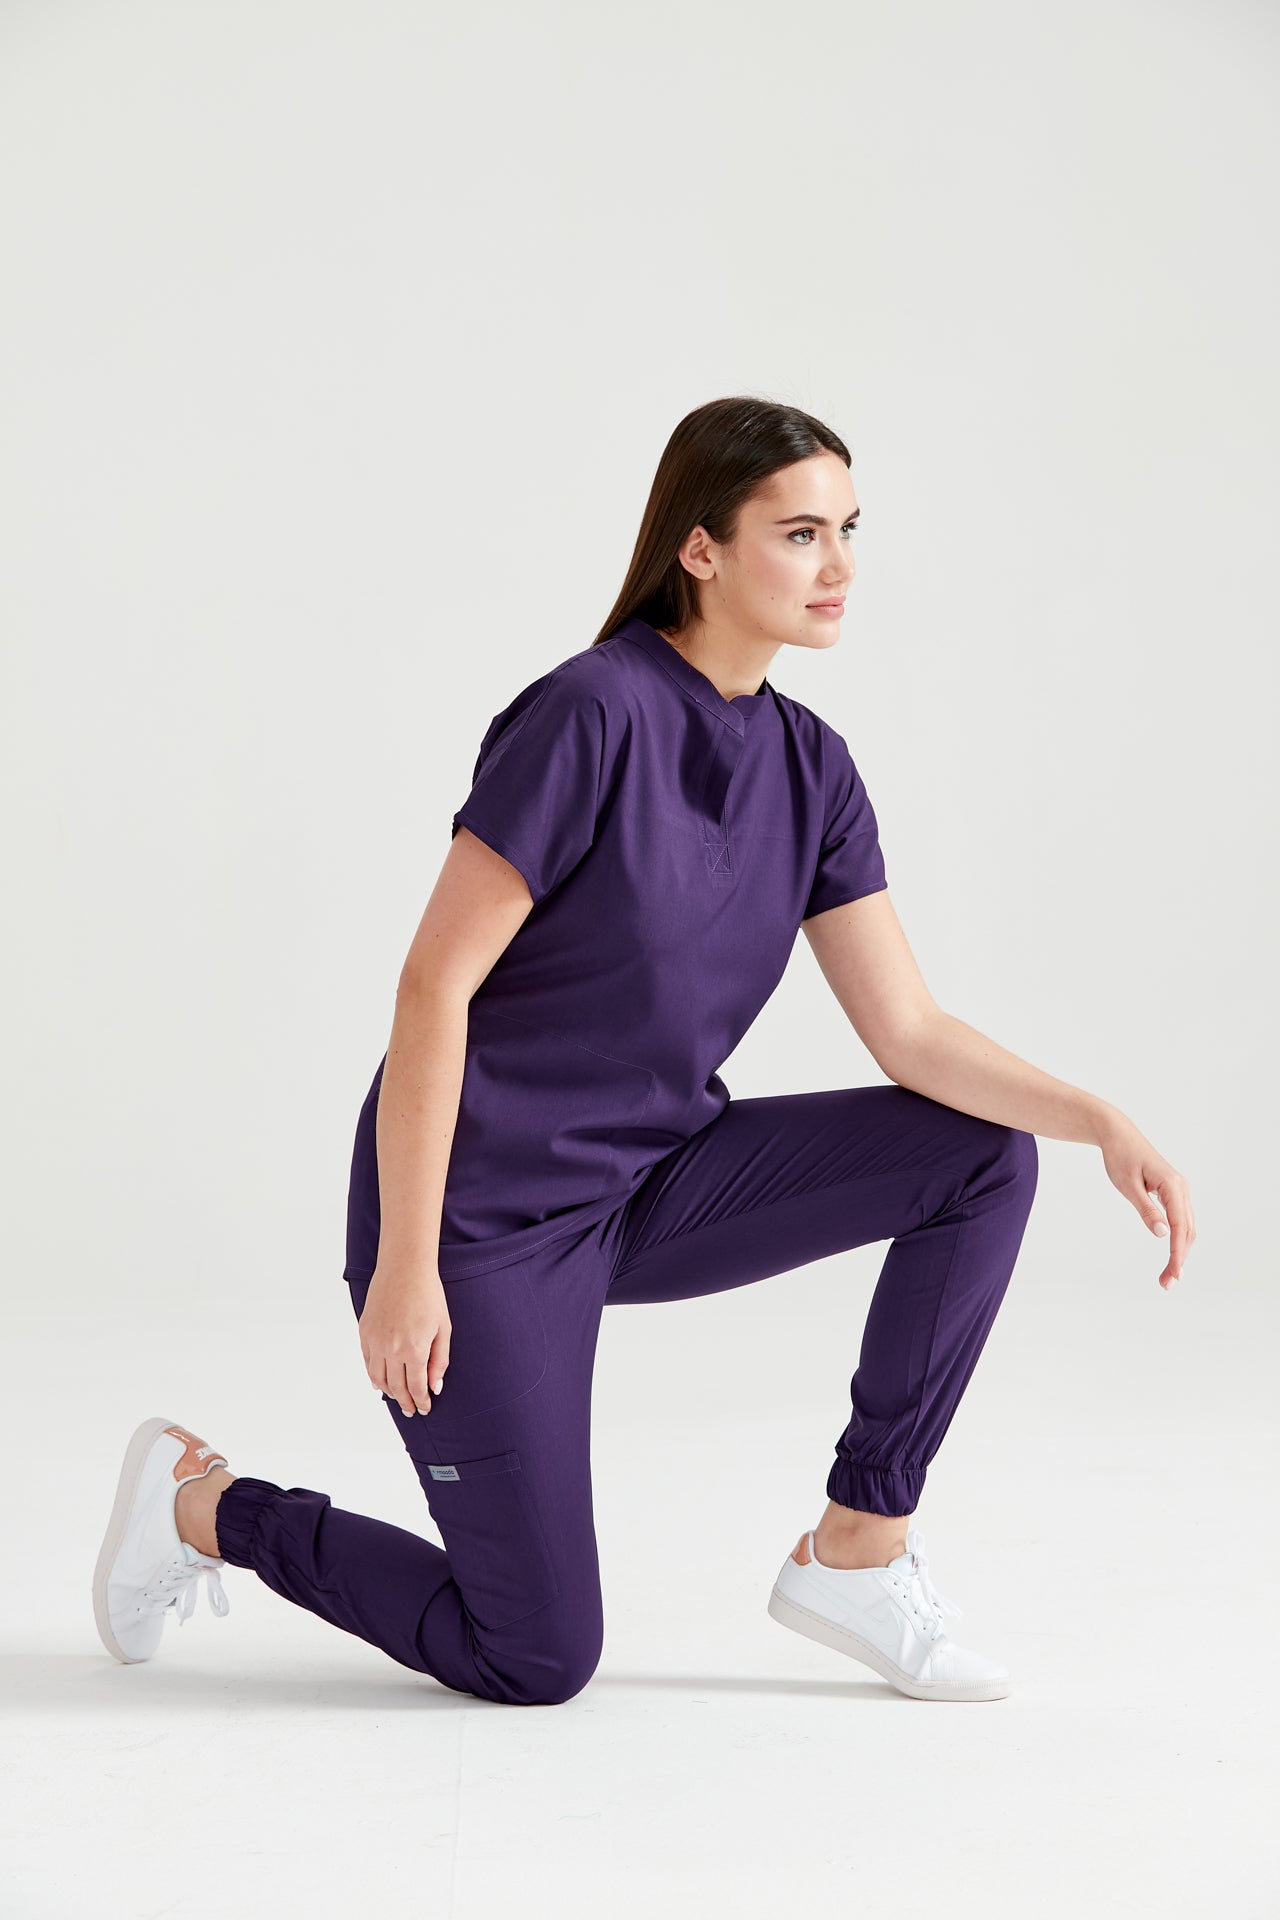 Asistenta medicala imbracata in costum medical mov Purple, pentru femei, vedere din profil